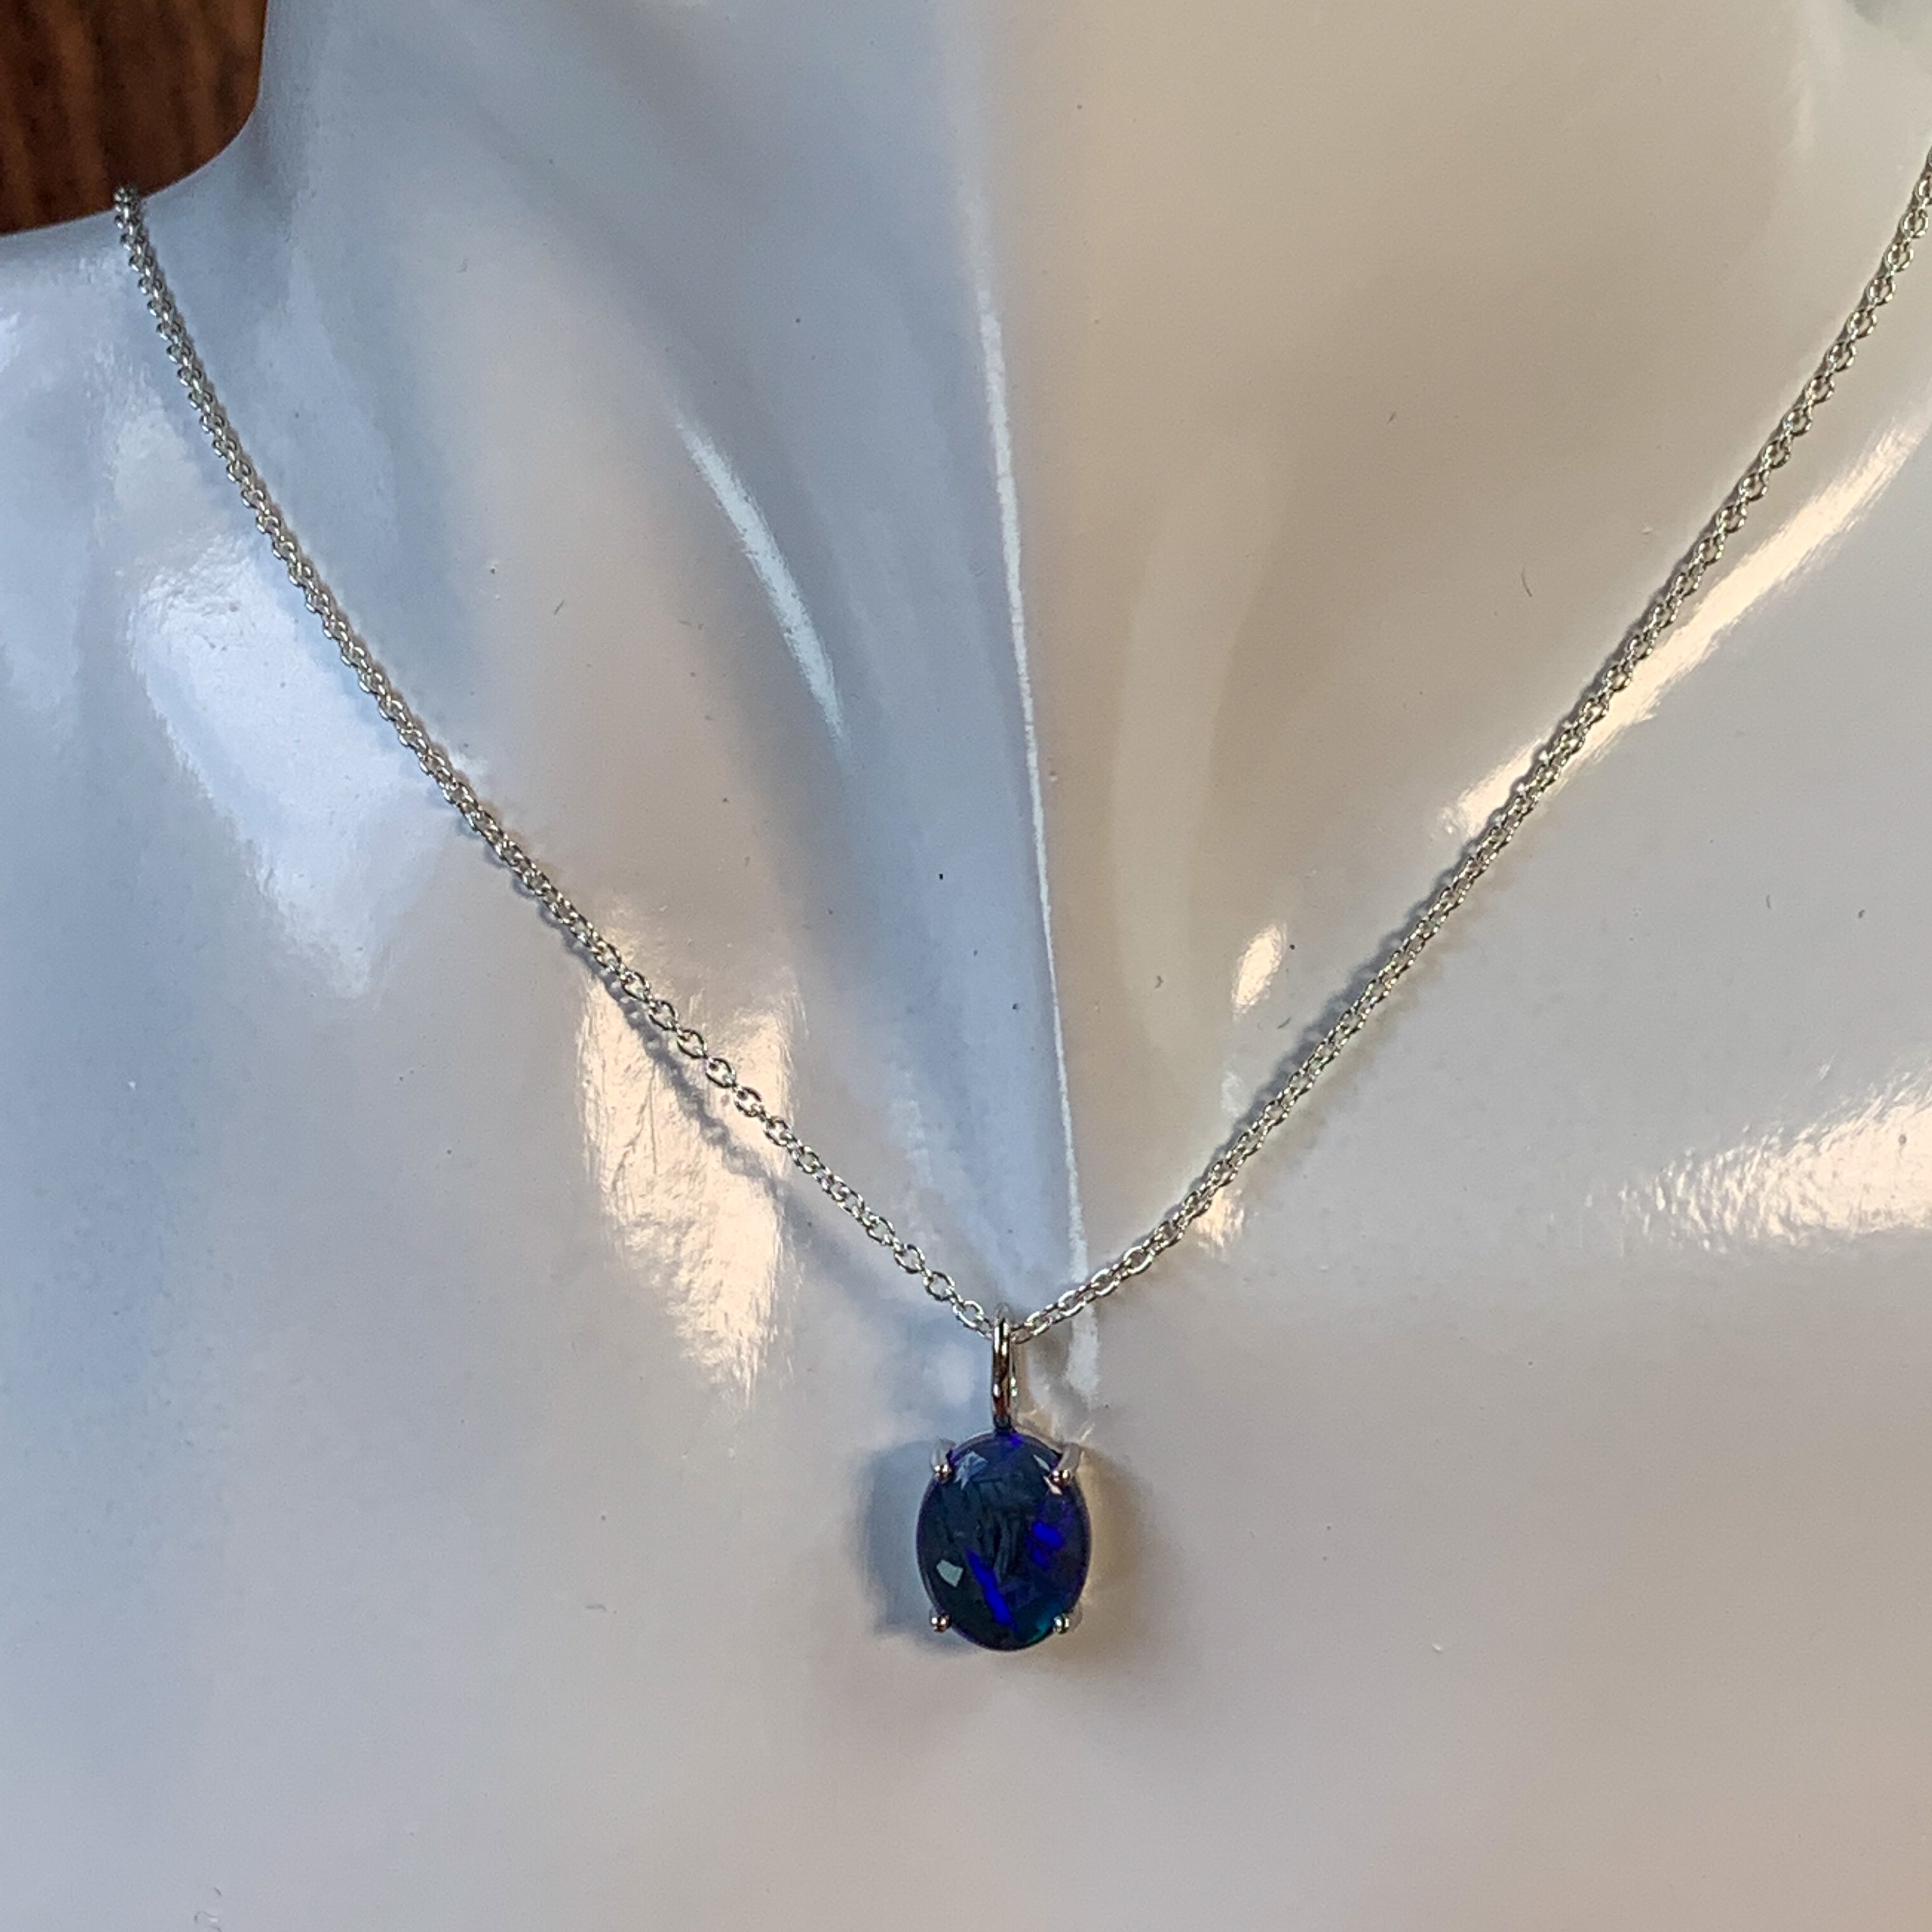 9kt White Gold Black Blue Opal 10x8mm solitaire pendant - Masterpiece Jewellery Opal & Gems Sydney Australia | Online Shop